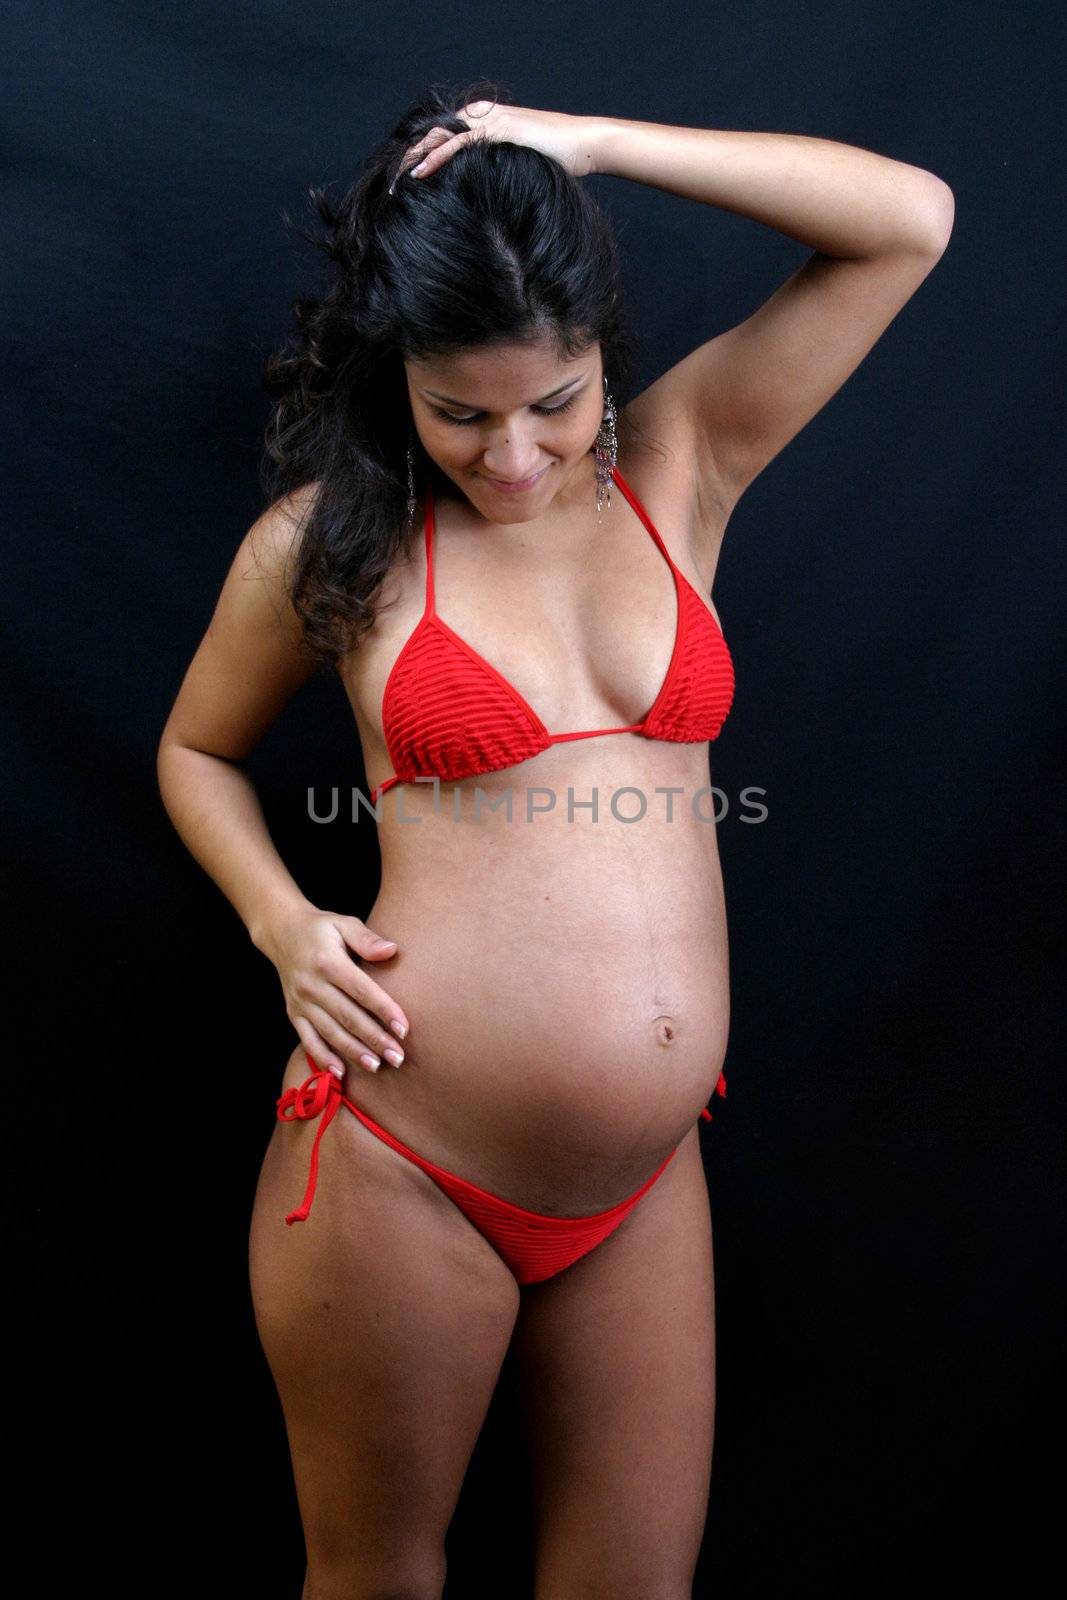 photo of pregnant female by jpcasais